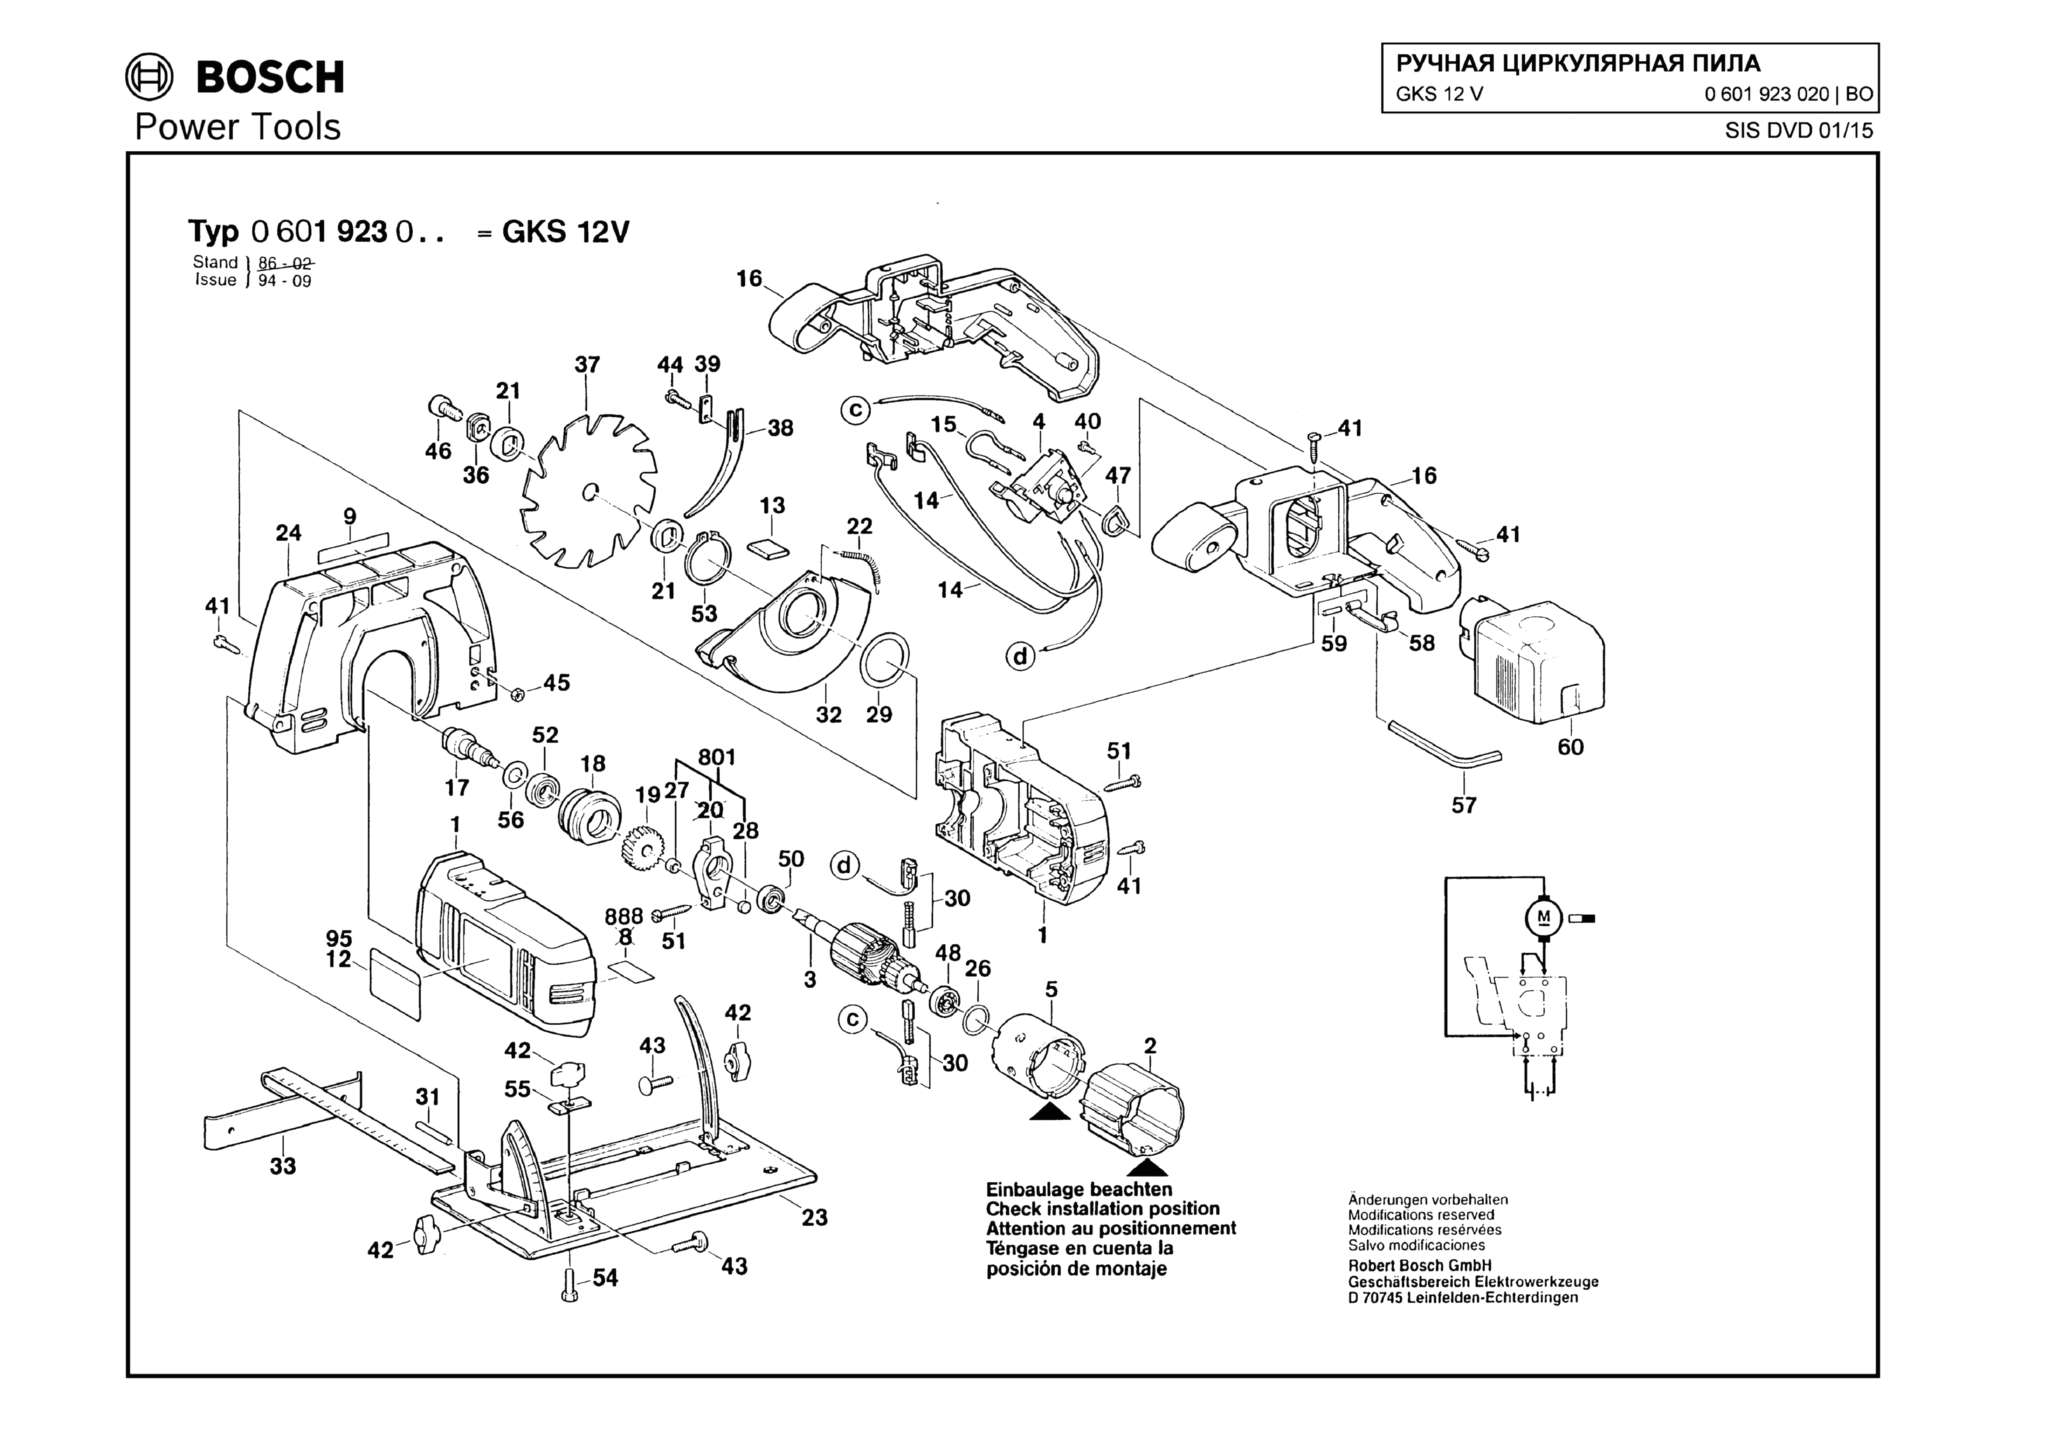 Запчасти, схема и деталировка Bosch GKS 12 V (ТИП 0601923020)